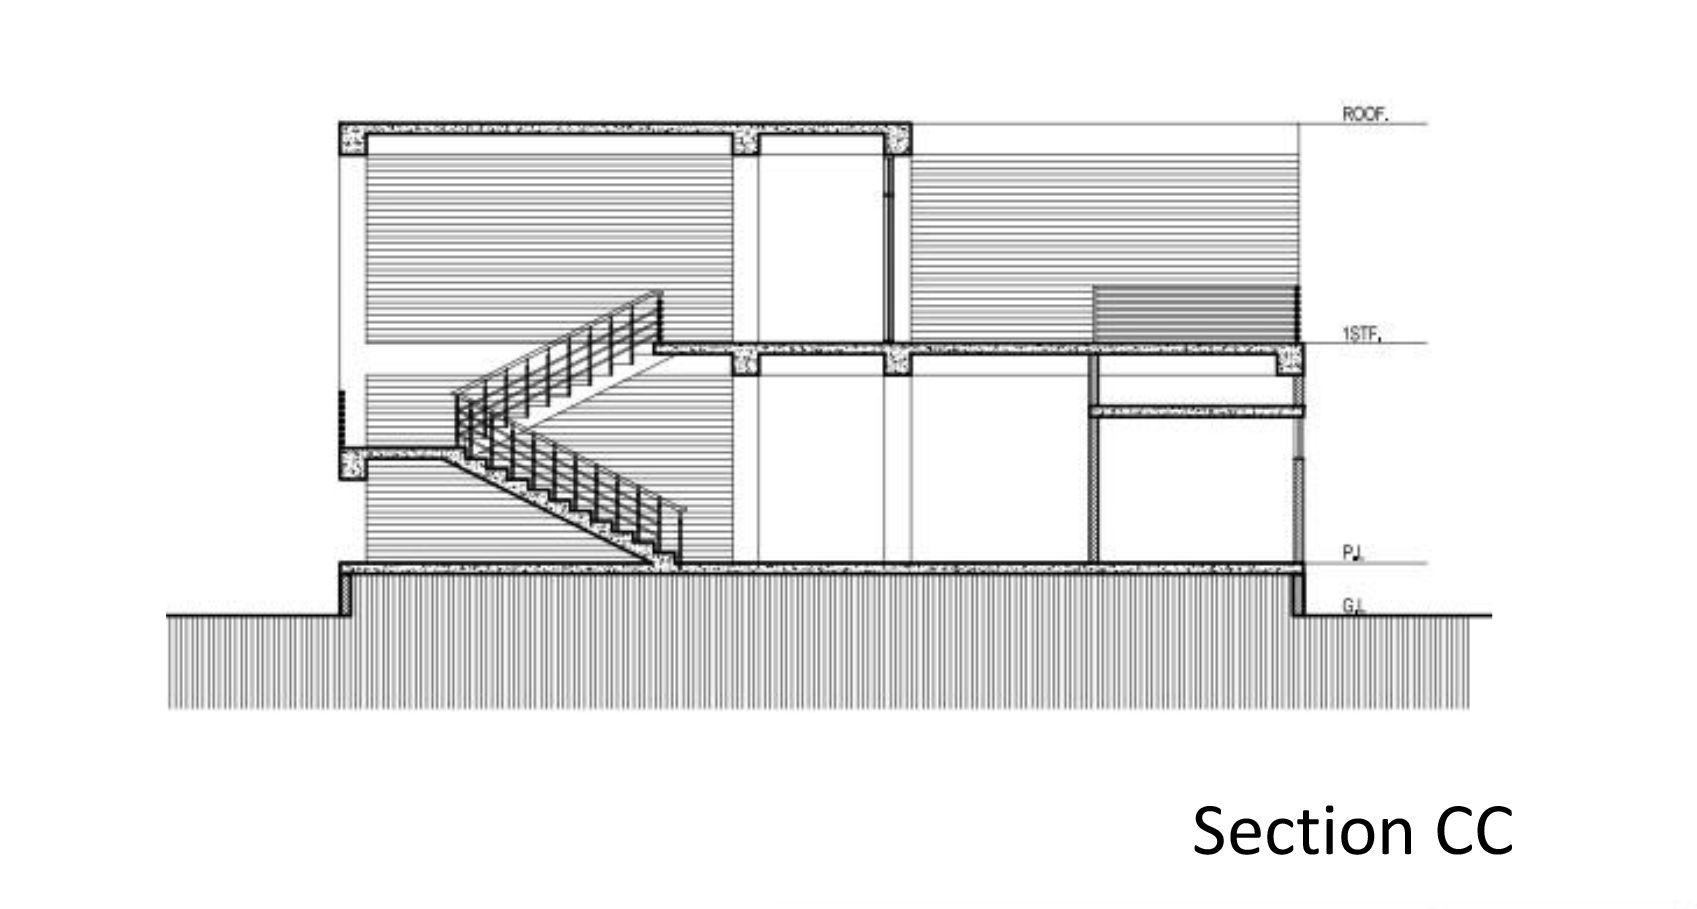 Section CC